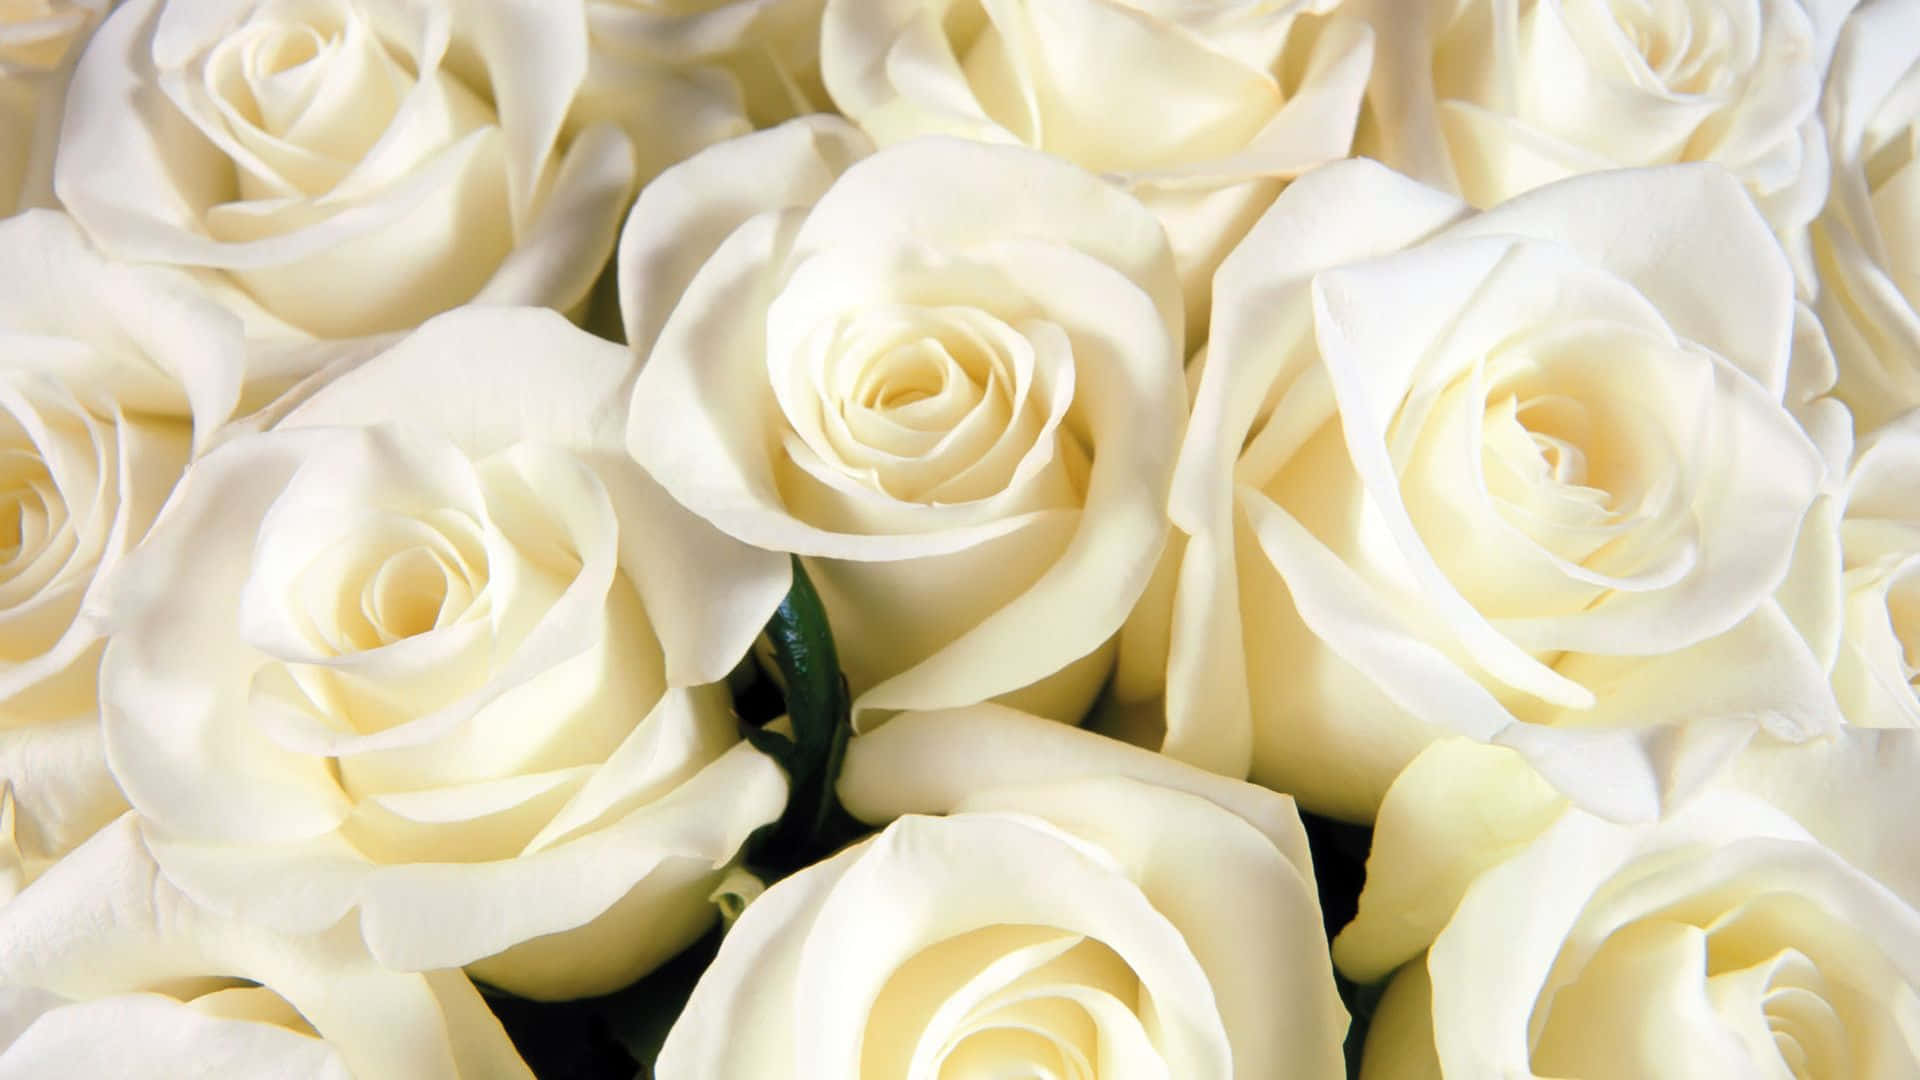 A beautiful white rose in full bloom.